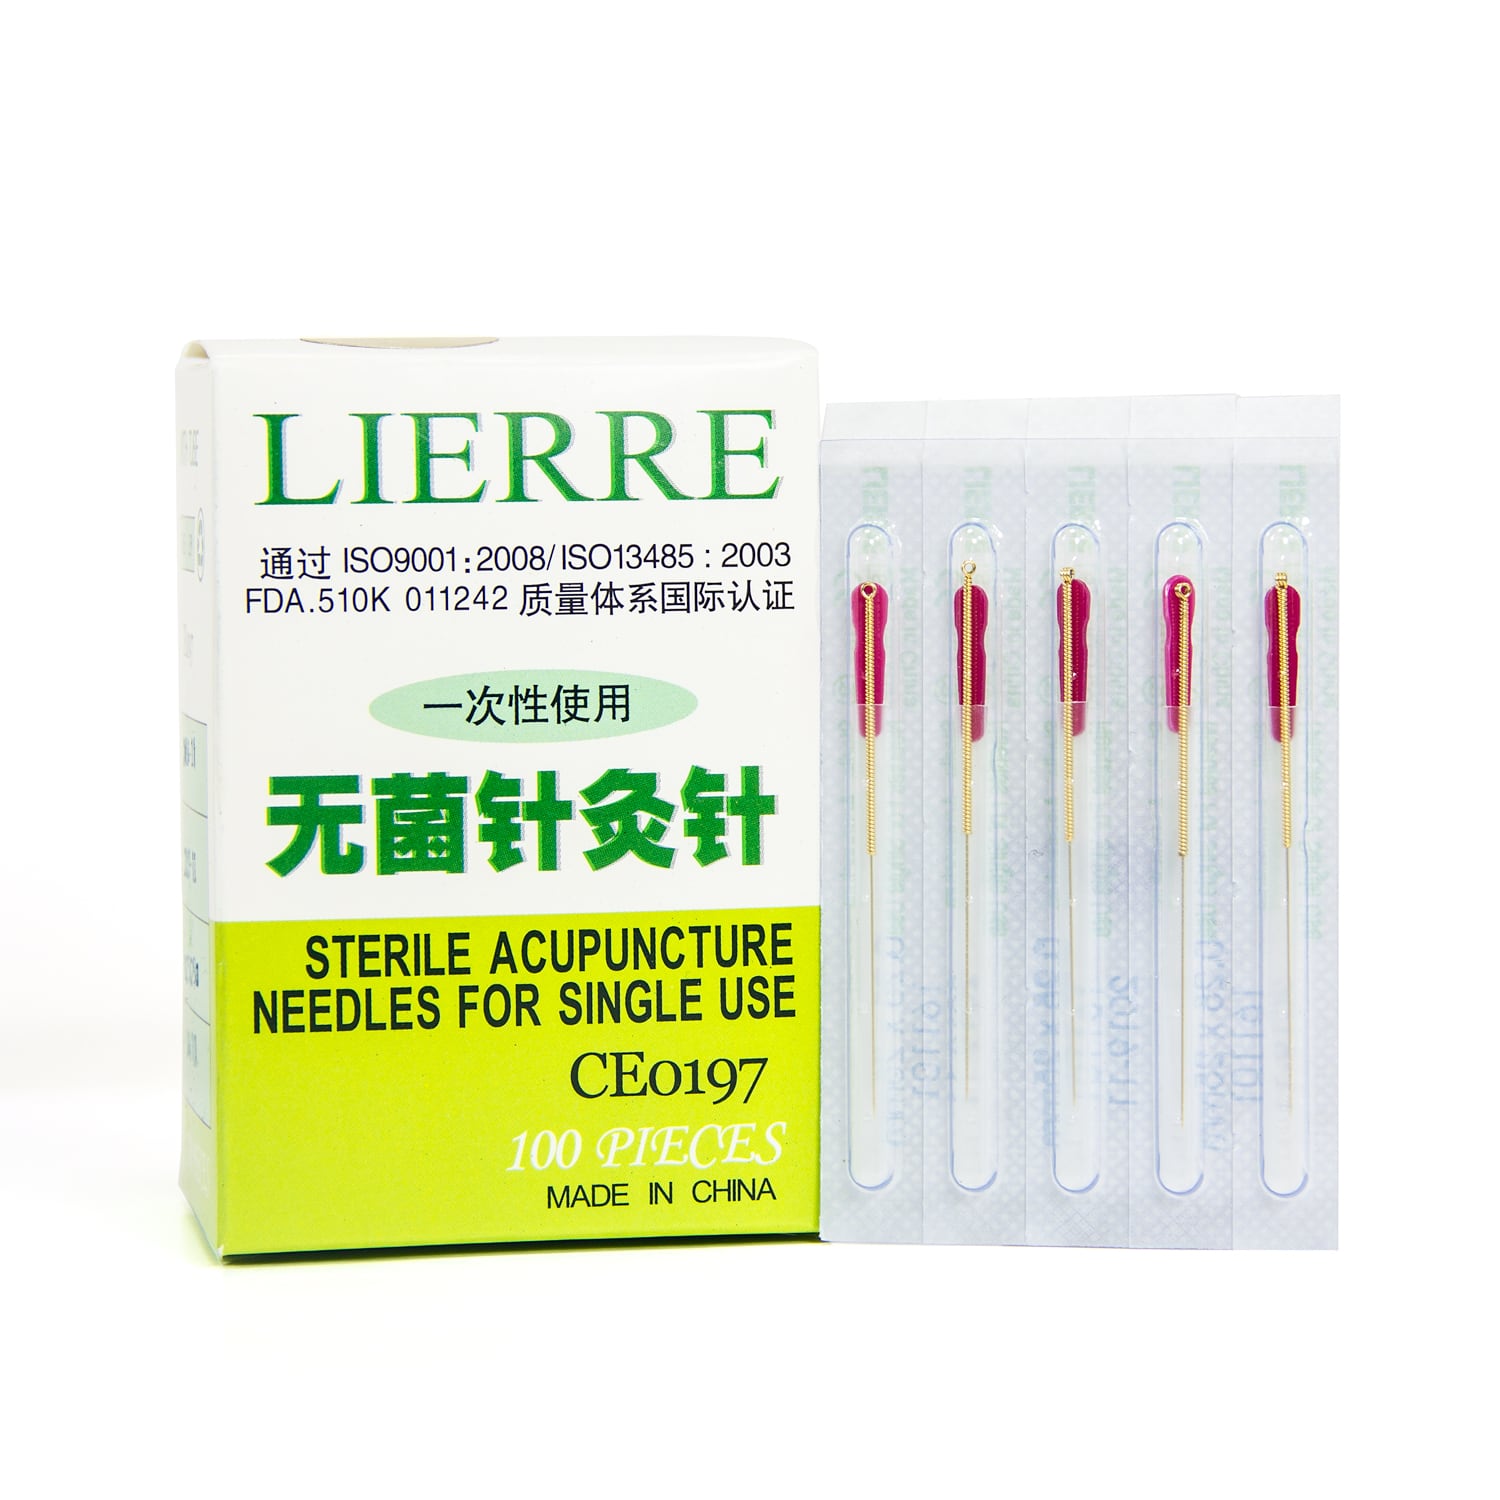 Lierre Golden Acupuncture needles 100 / box 